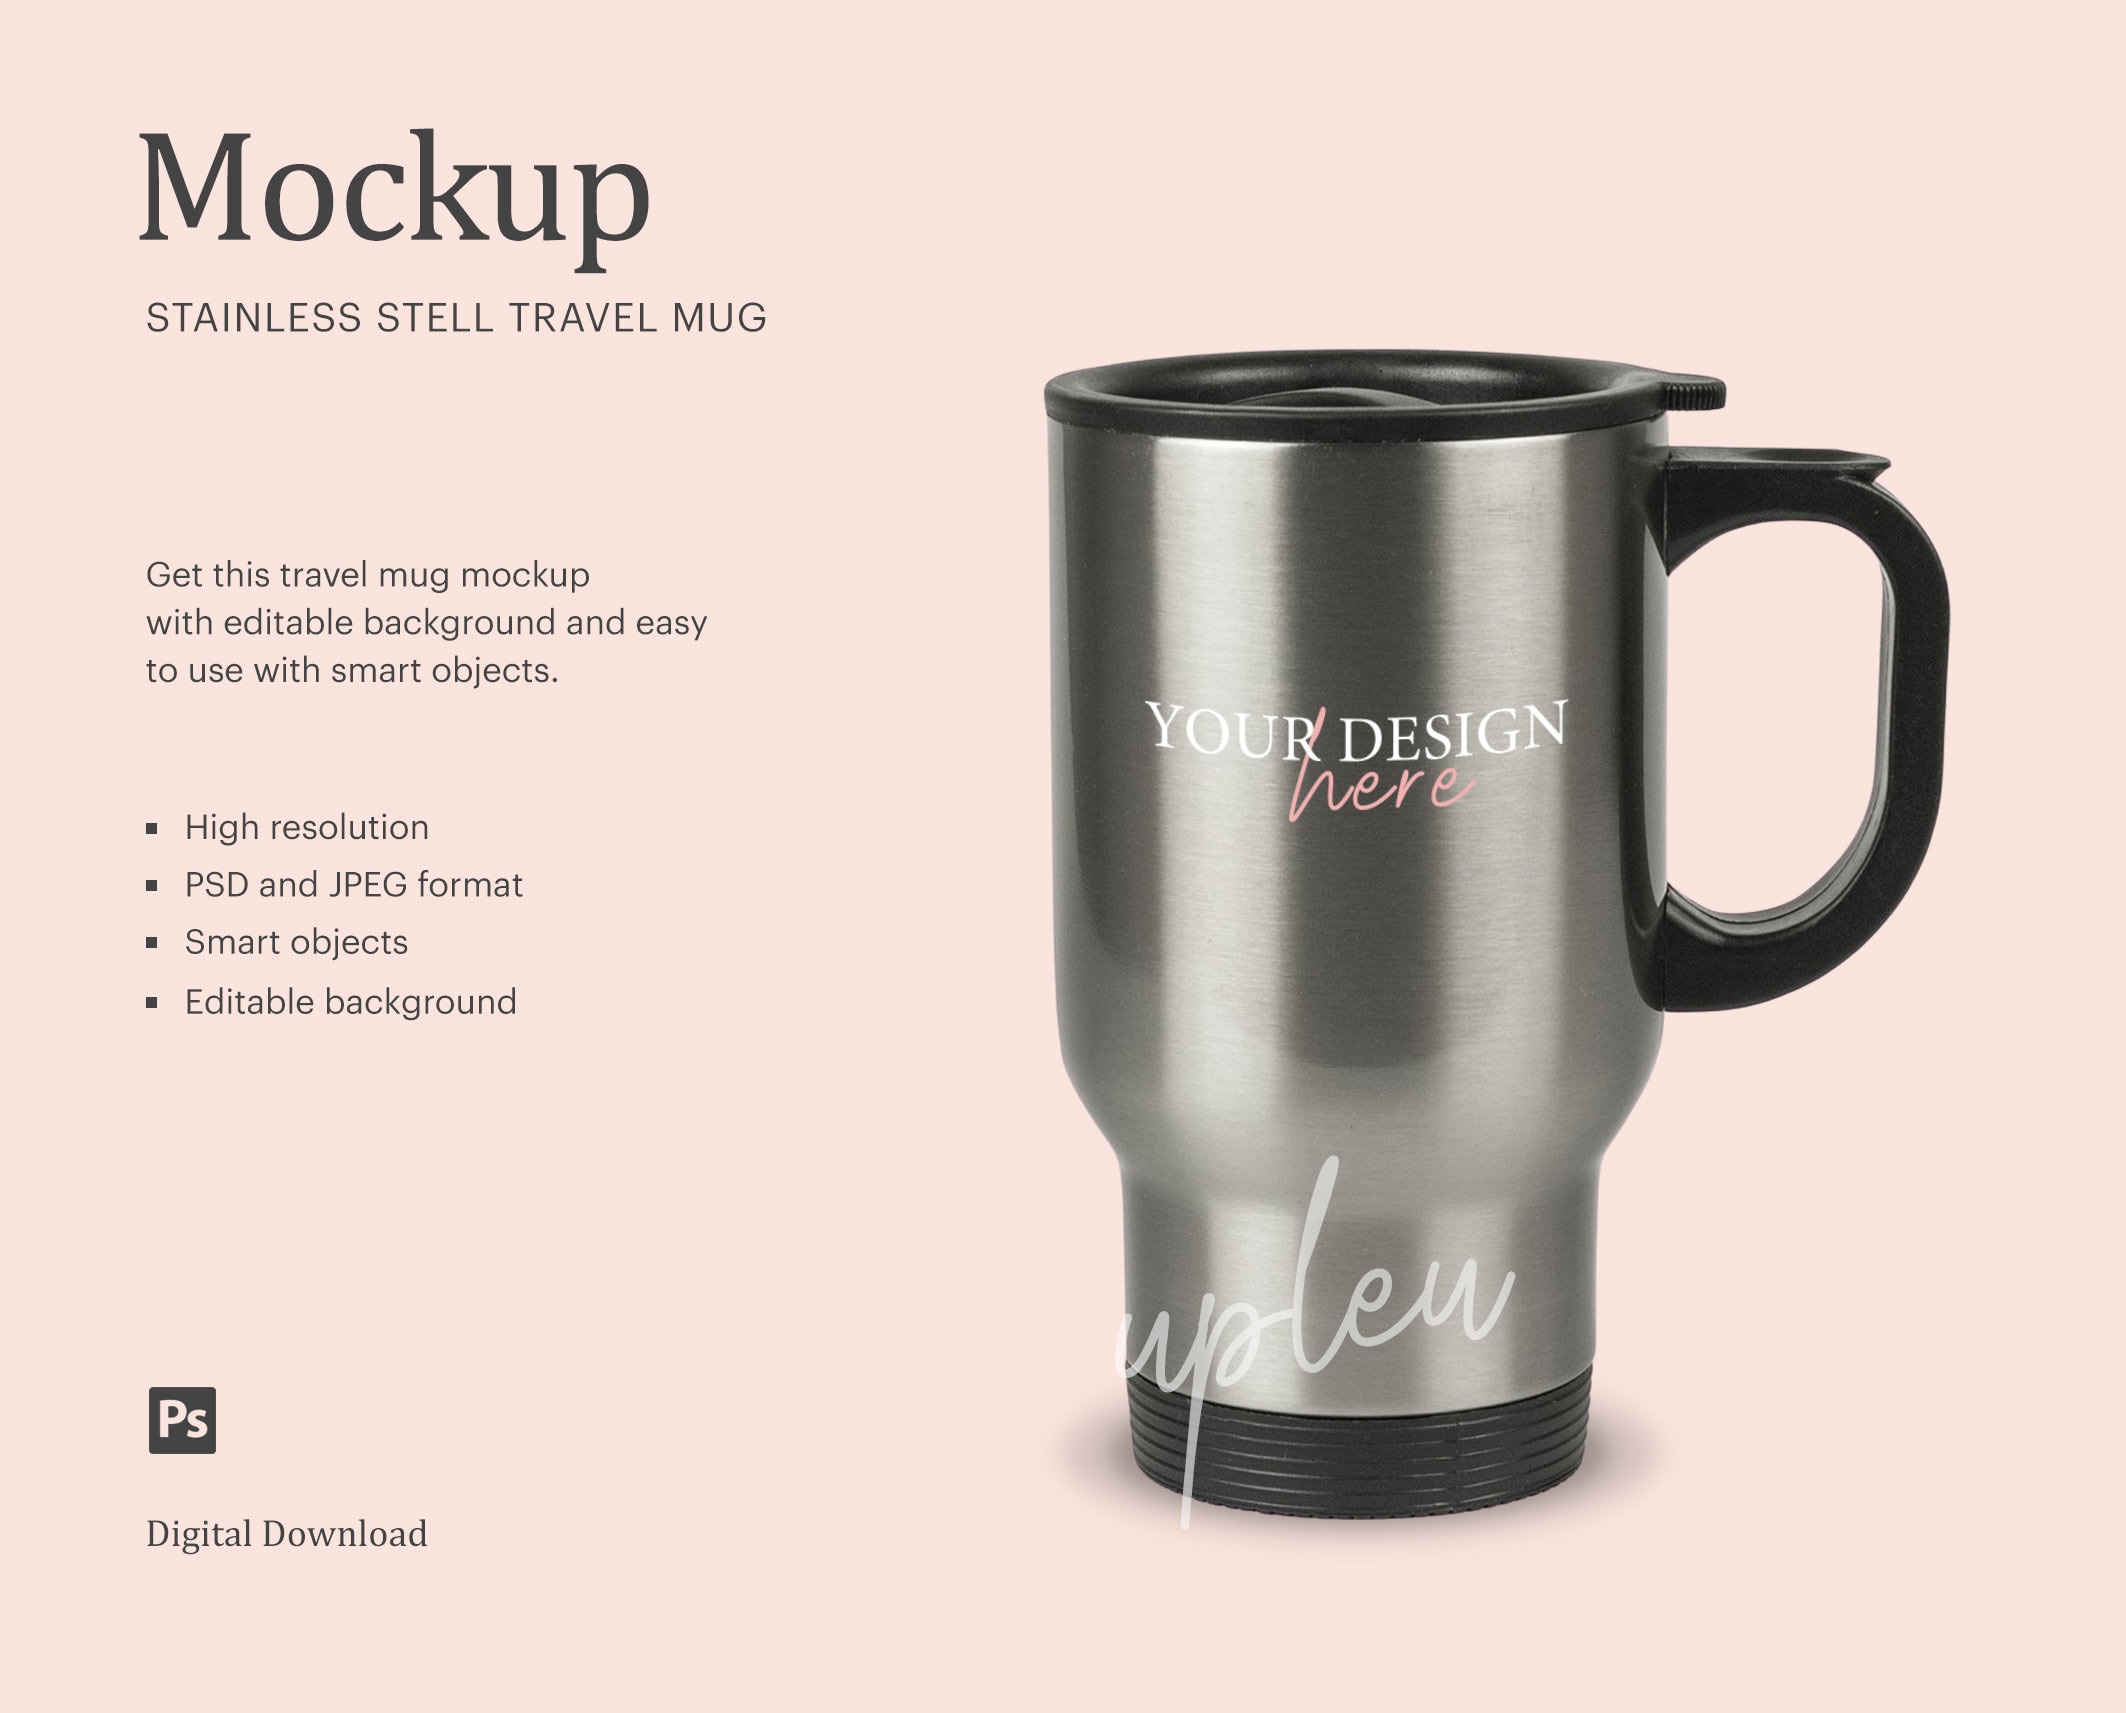 Travel Tumbler Mug Mockup #344256 - TemplateMonster